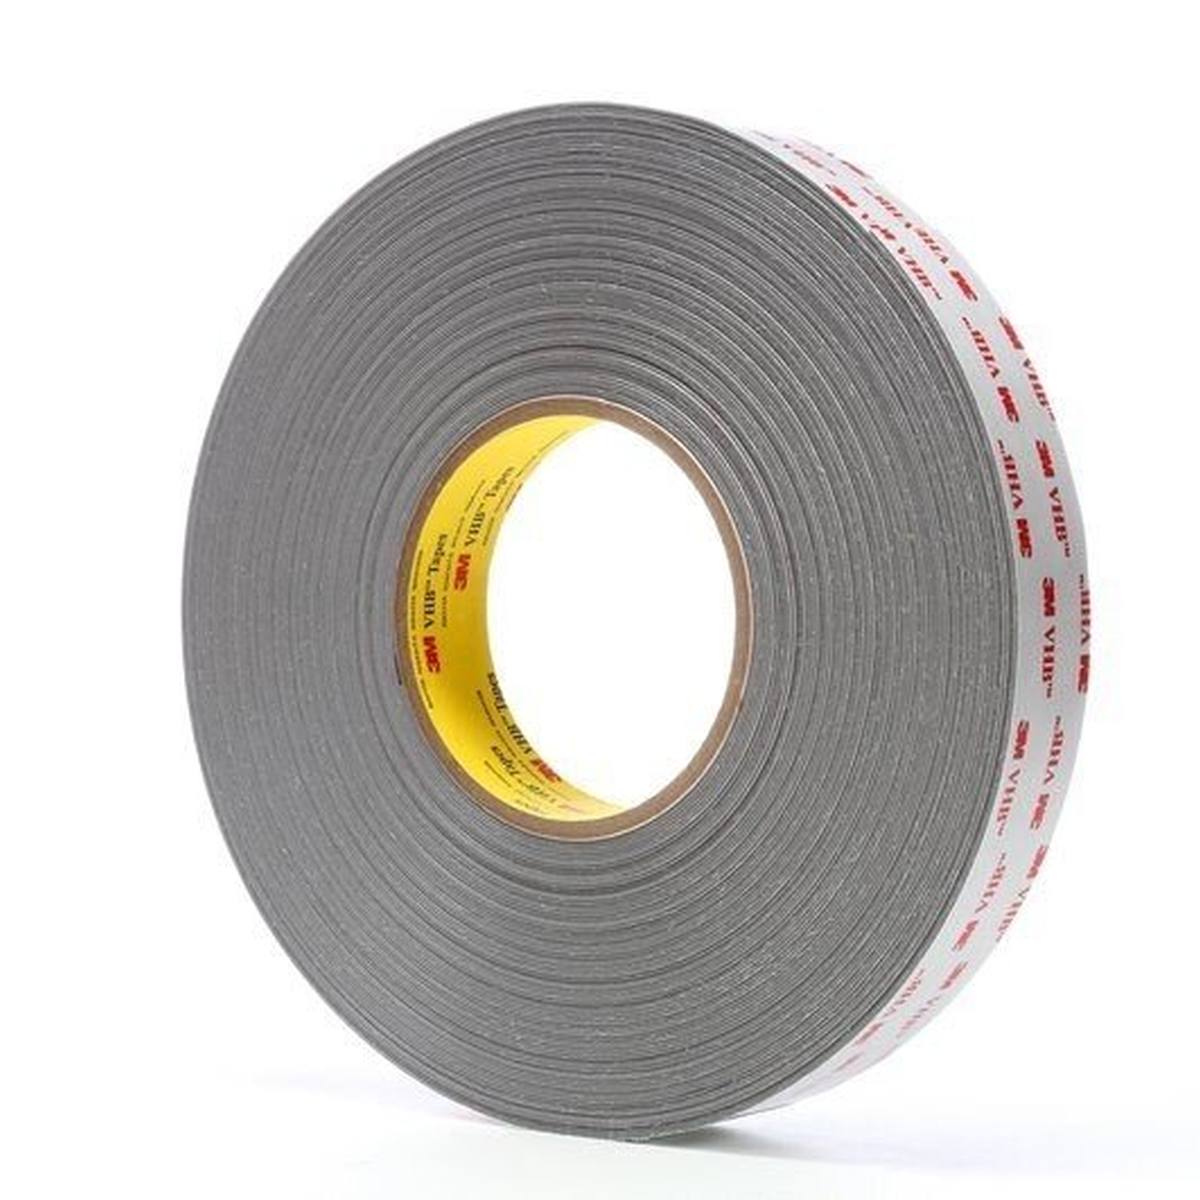 3M VHB adhesive tape RP 16P, gray, 19 mm x 66 m, 0.4 mm